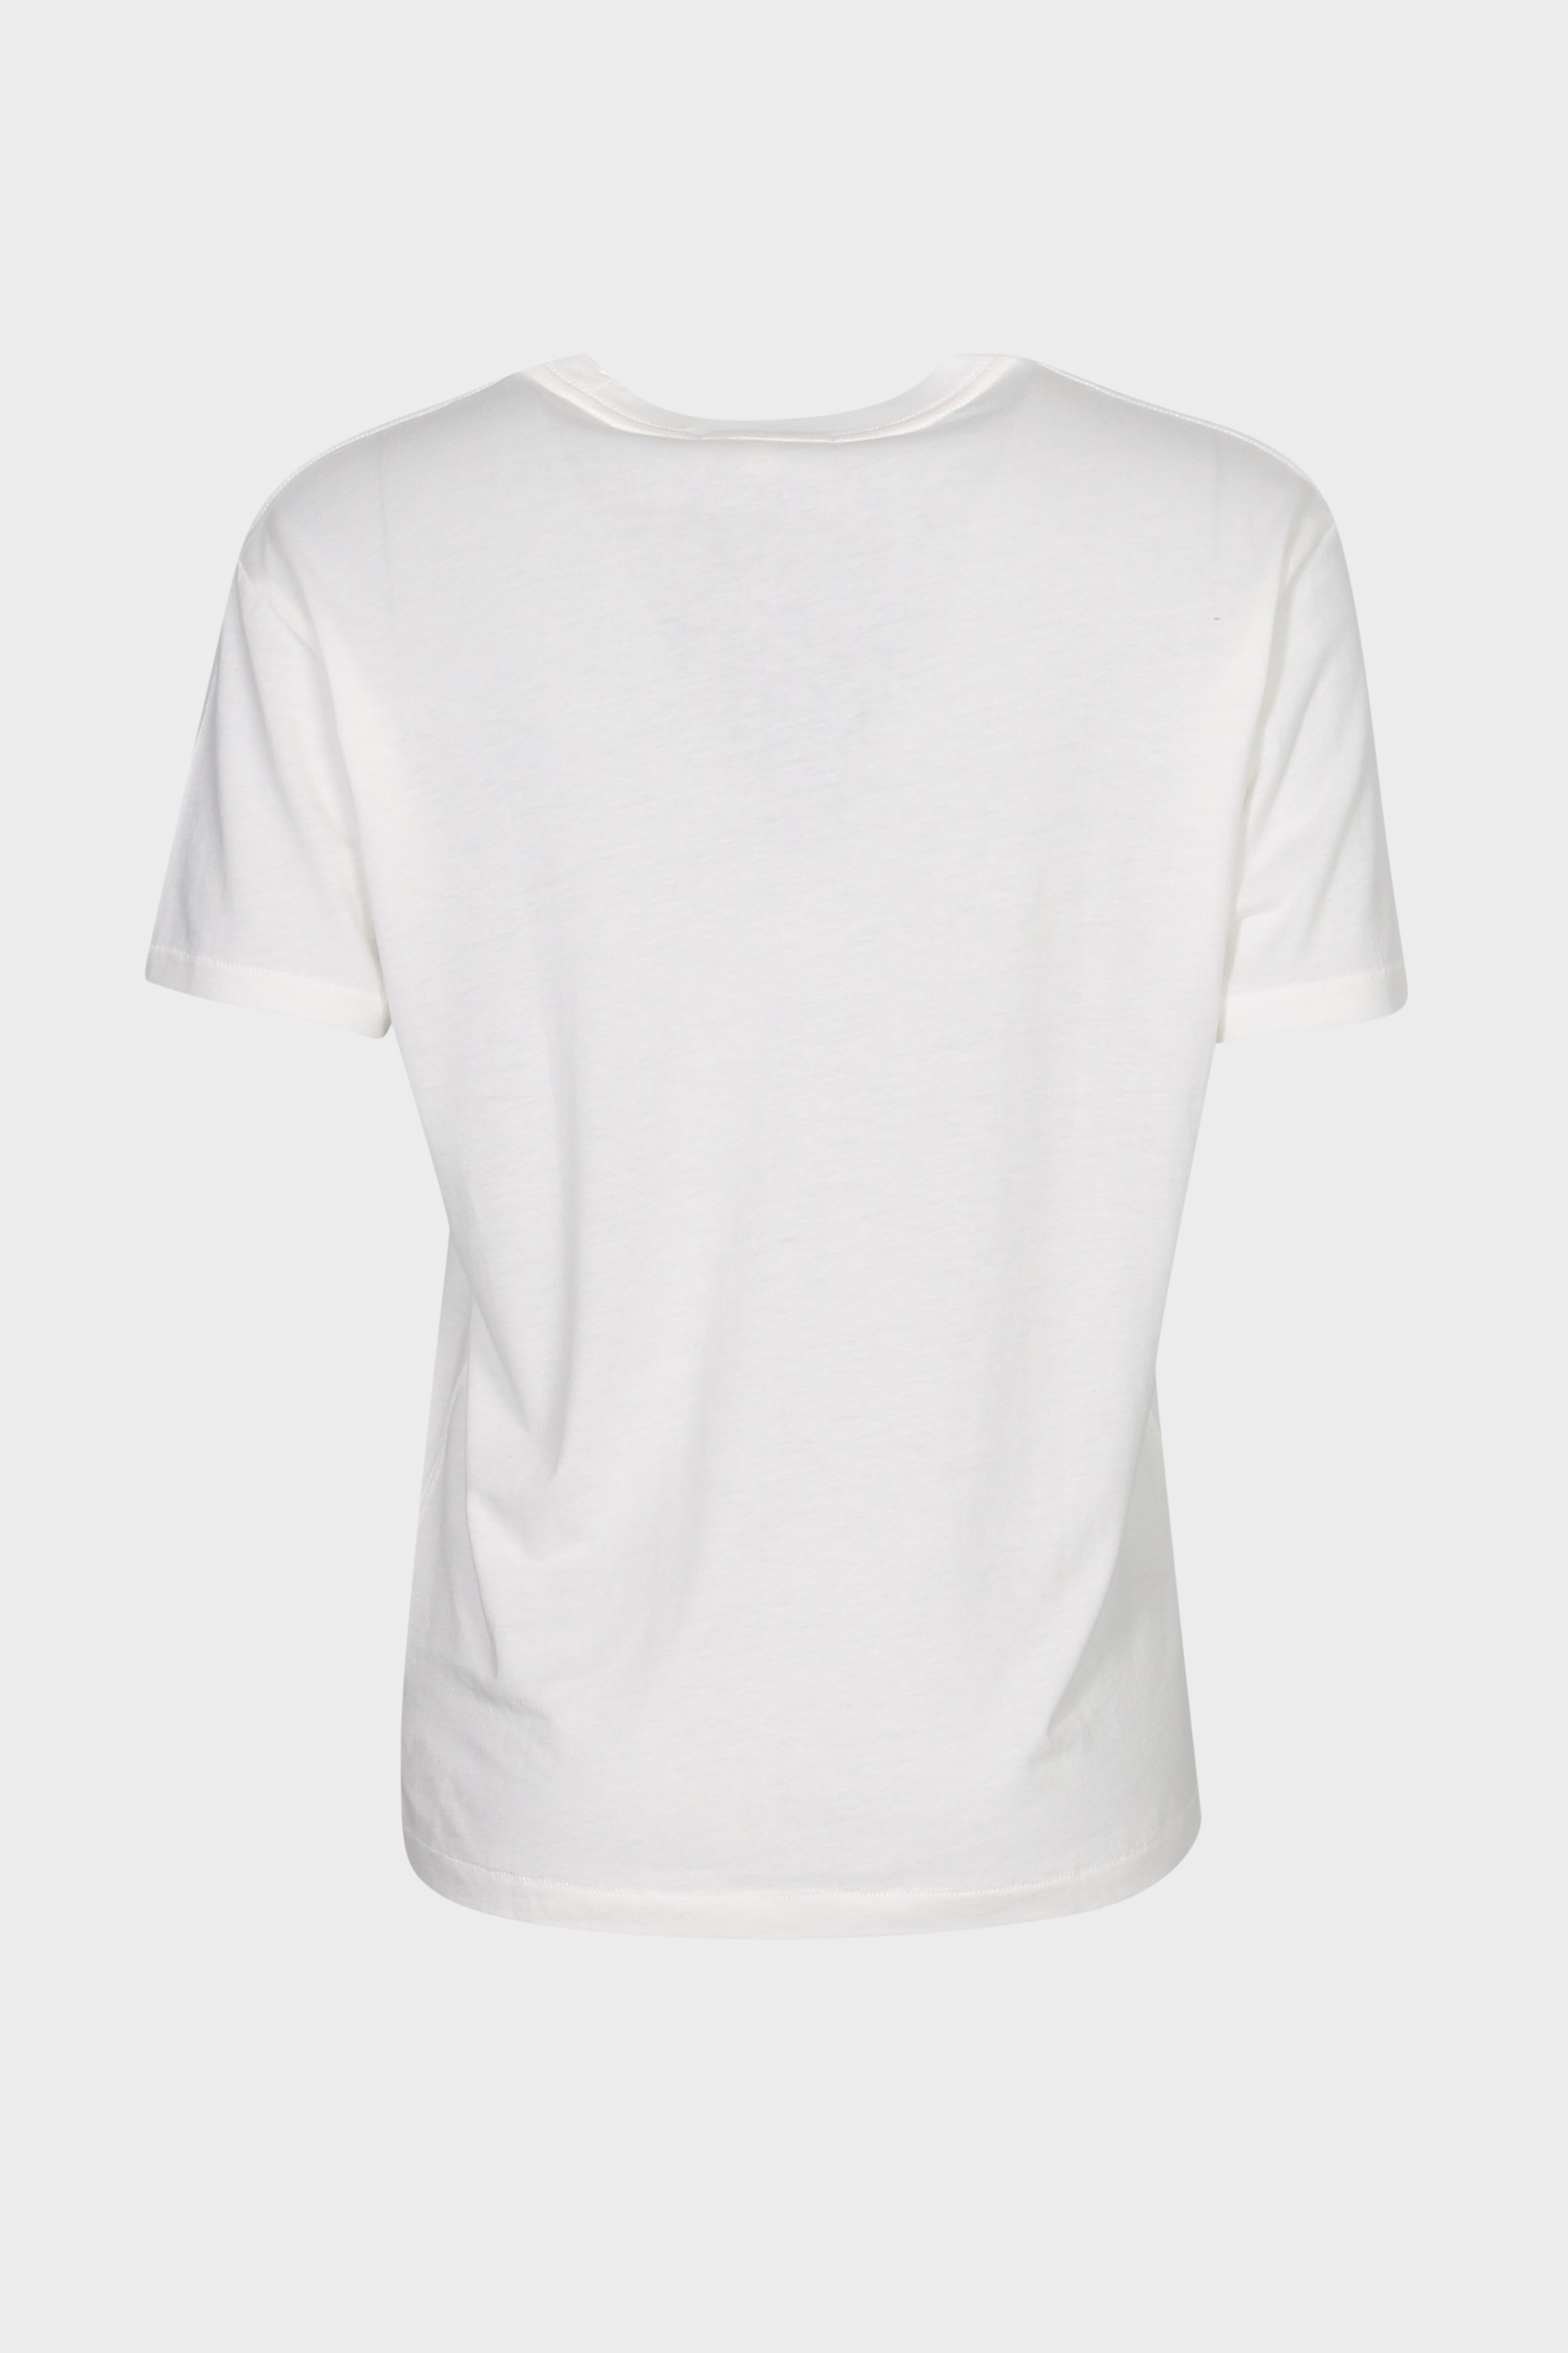 ÉTERNE Boyfriend T-Shirt in Ivory XS